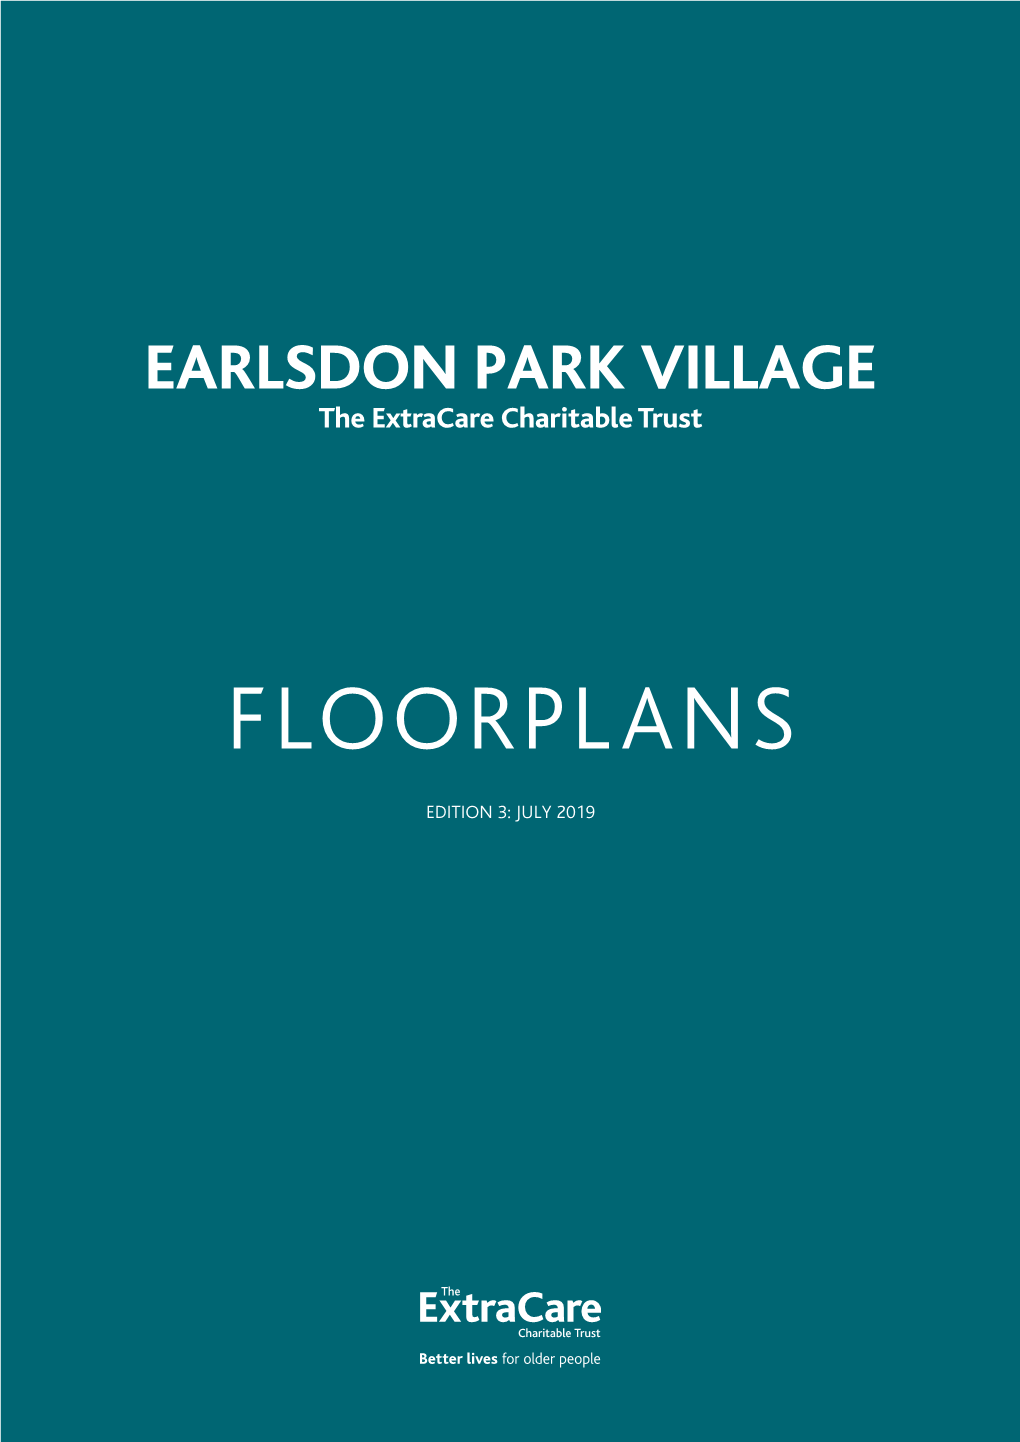 Download the Village Floor Plans